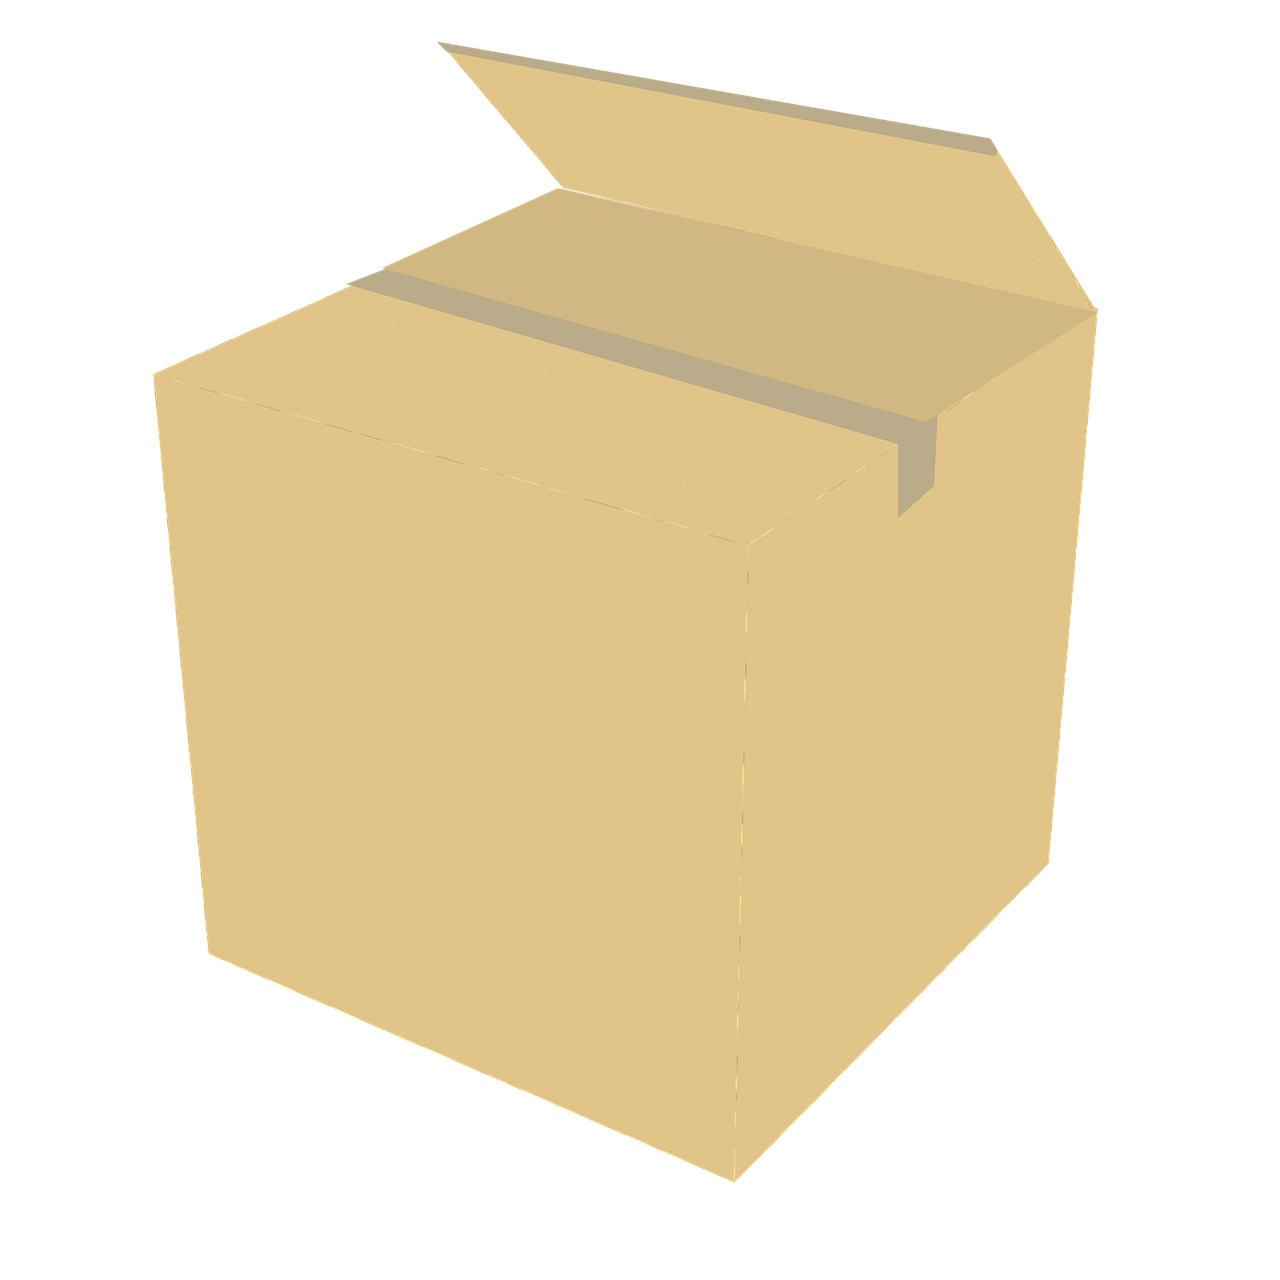 box packing cardboard free photo